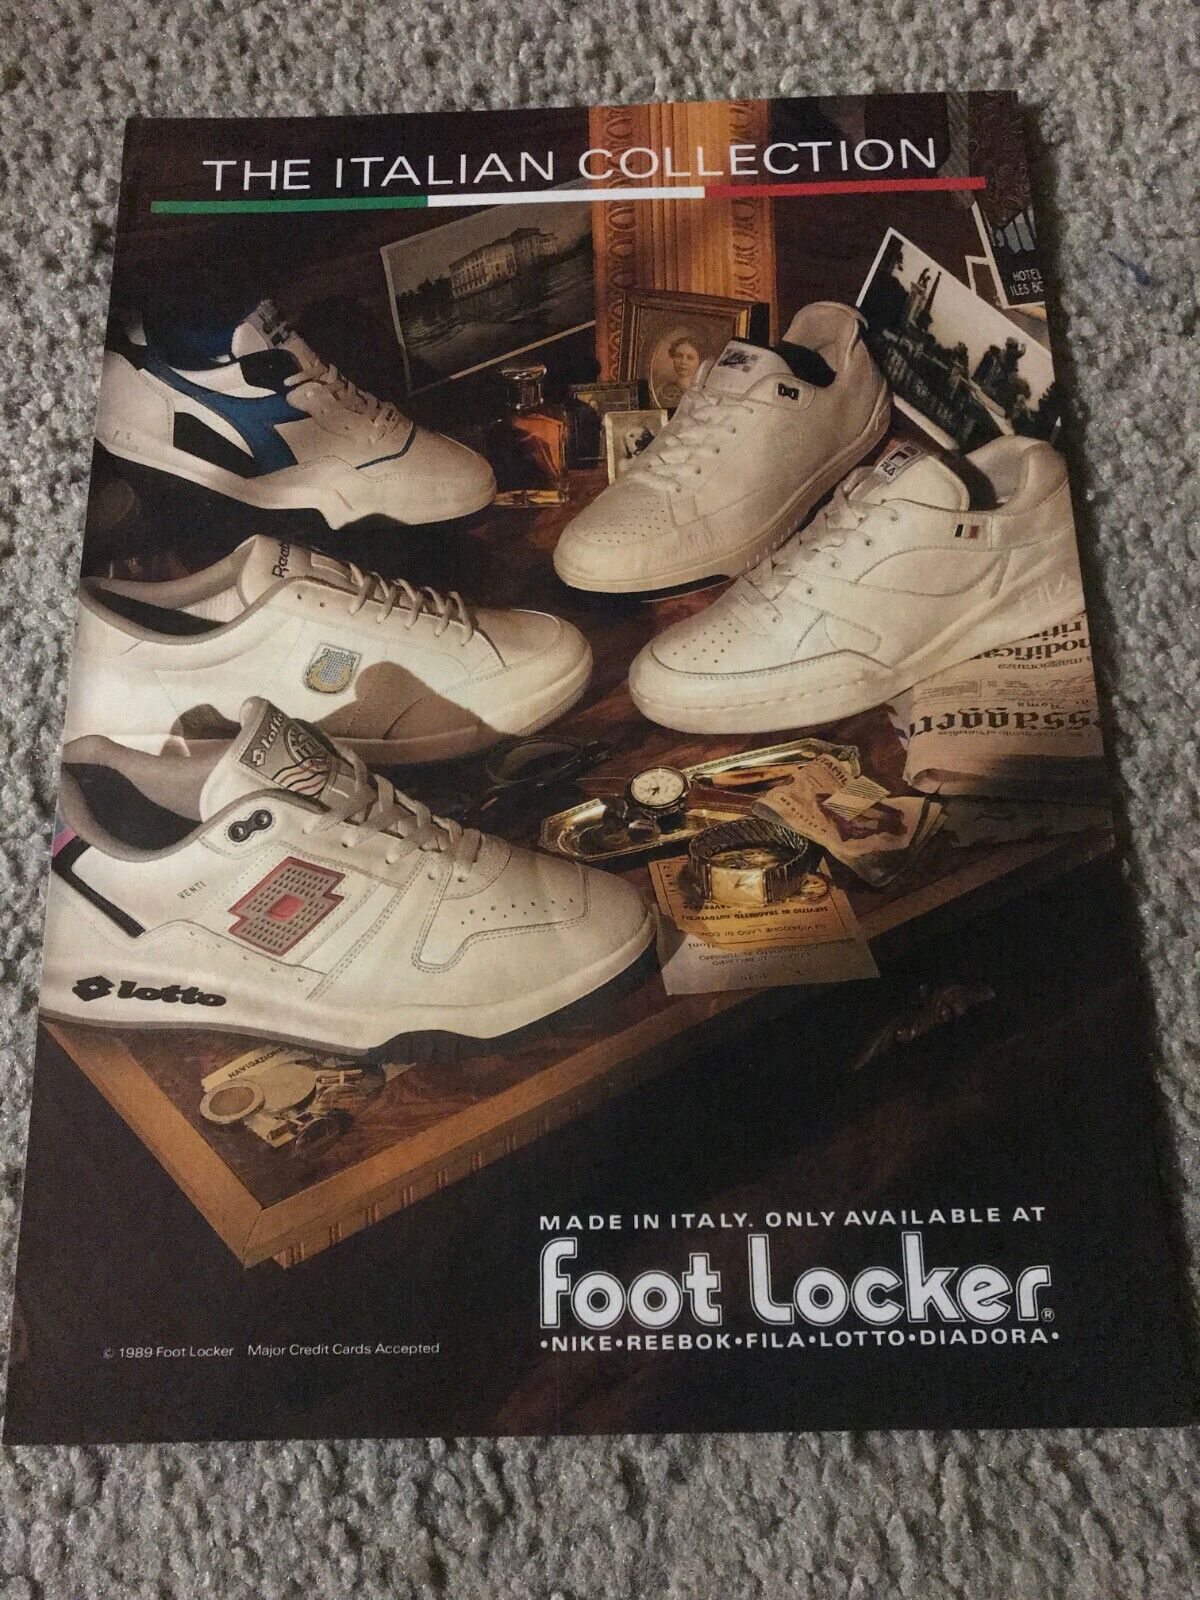 1989 NIKE ITALIAN COLLECTION Shoes Poster Print Ad REEBOK LOTTO DIADORA FILA 80s